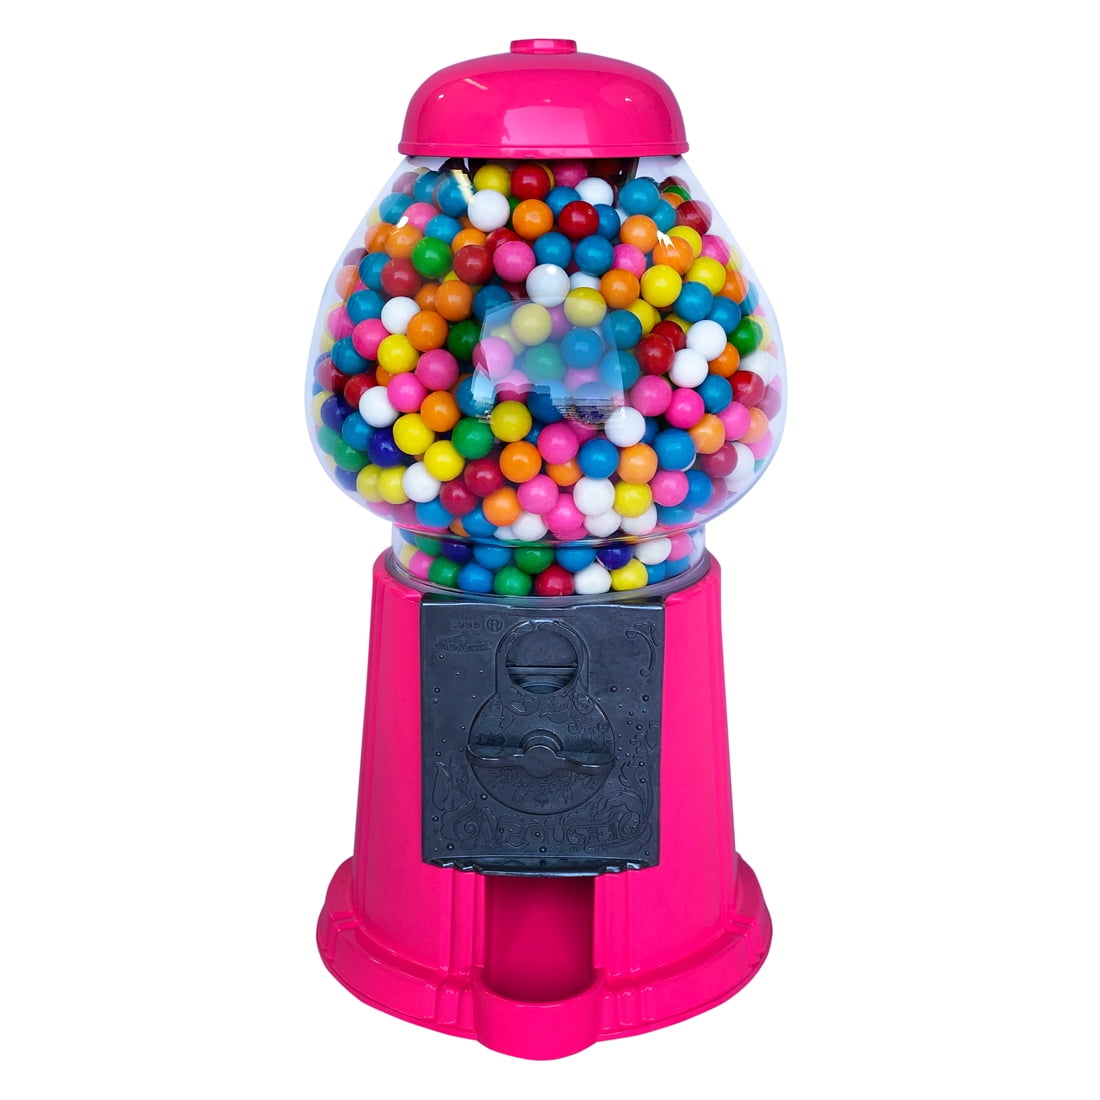 Download Gumball Dreams Classic Gumball Machine Candy Dispenser 12 Inch Hot Pink Walmart Com Walmart Com